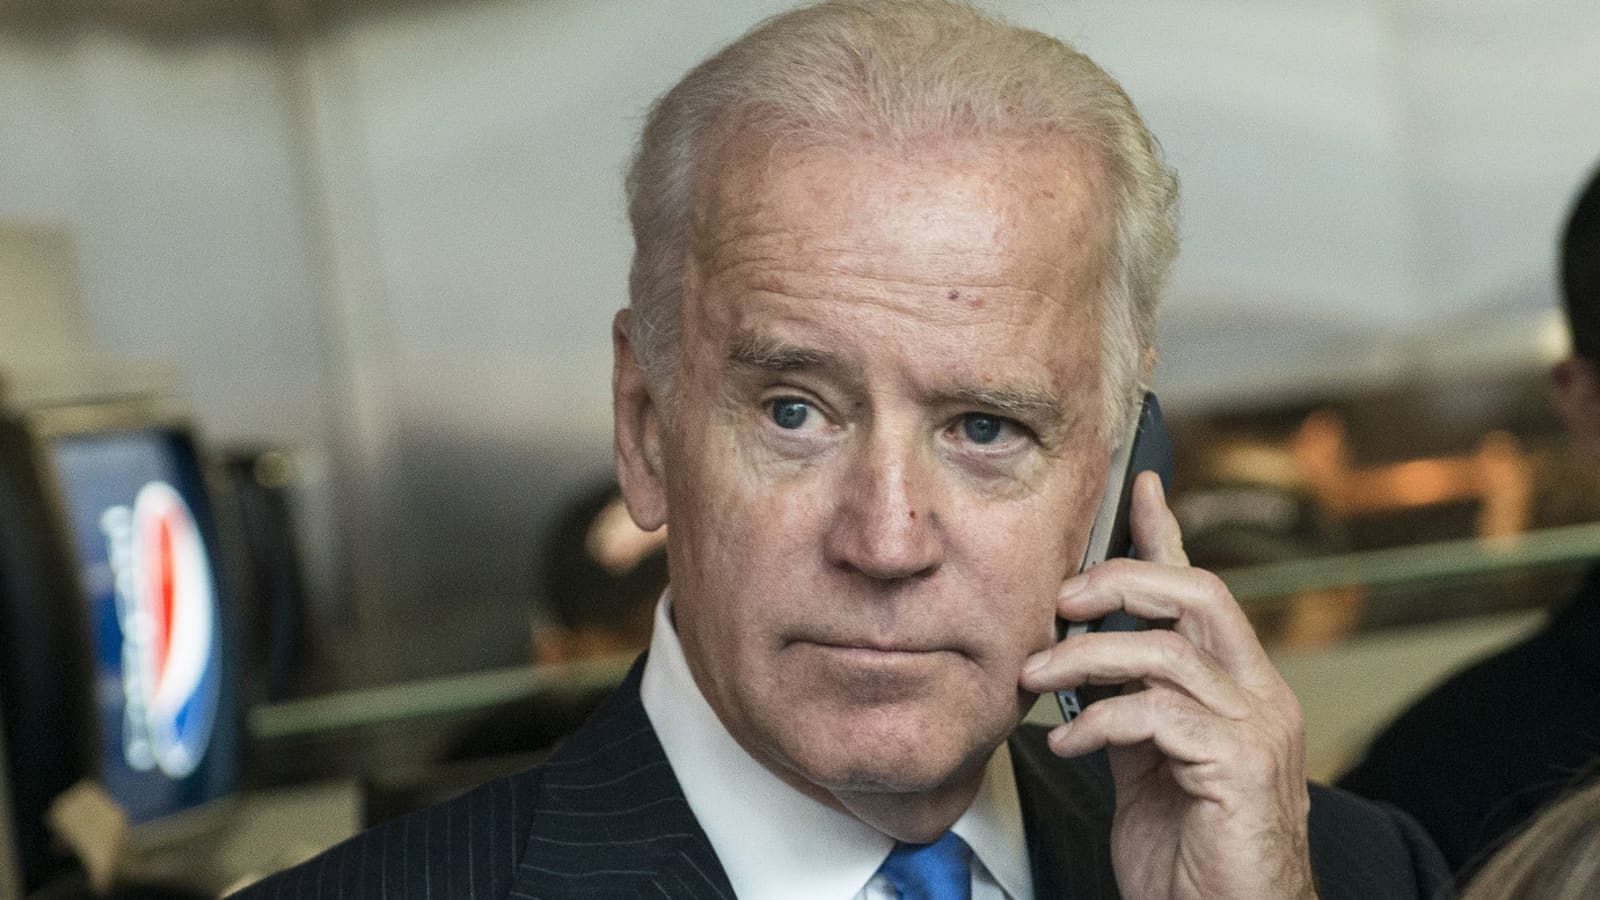 Joe Biden talks to Democratic donors about 2020 presidential run